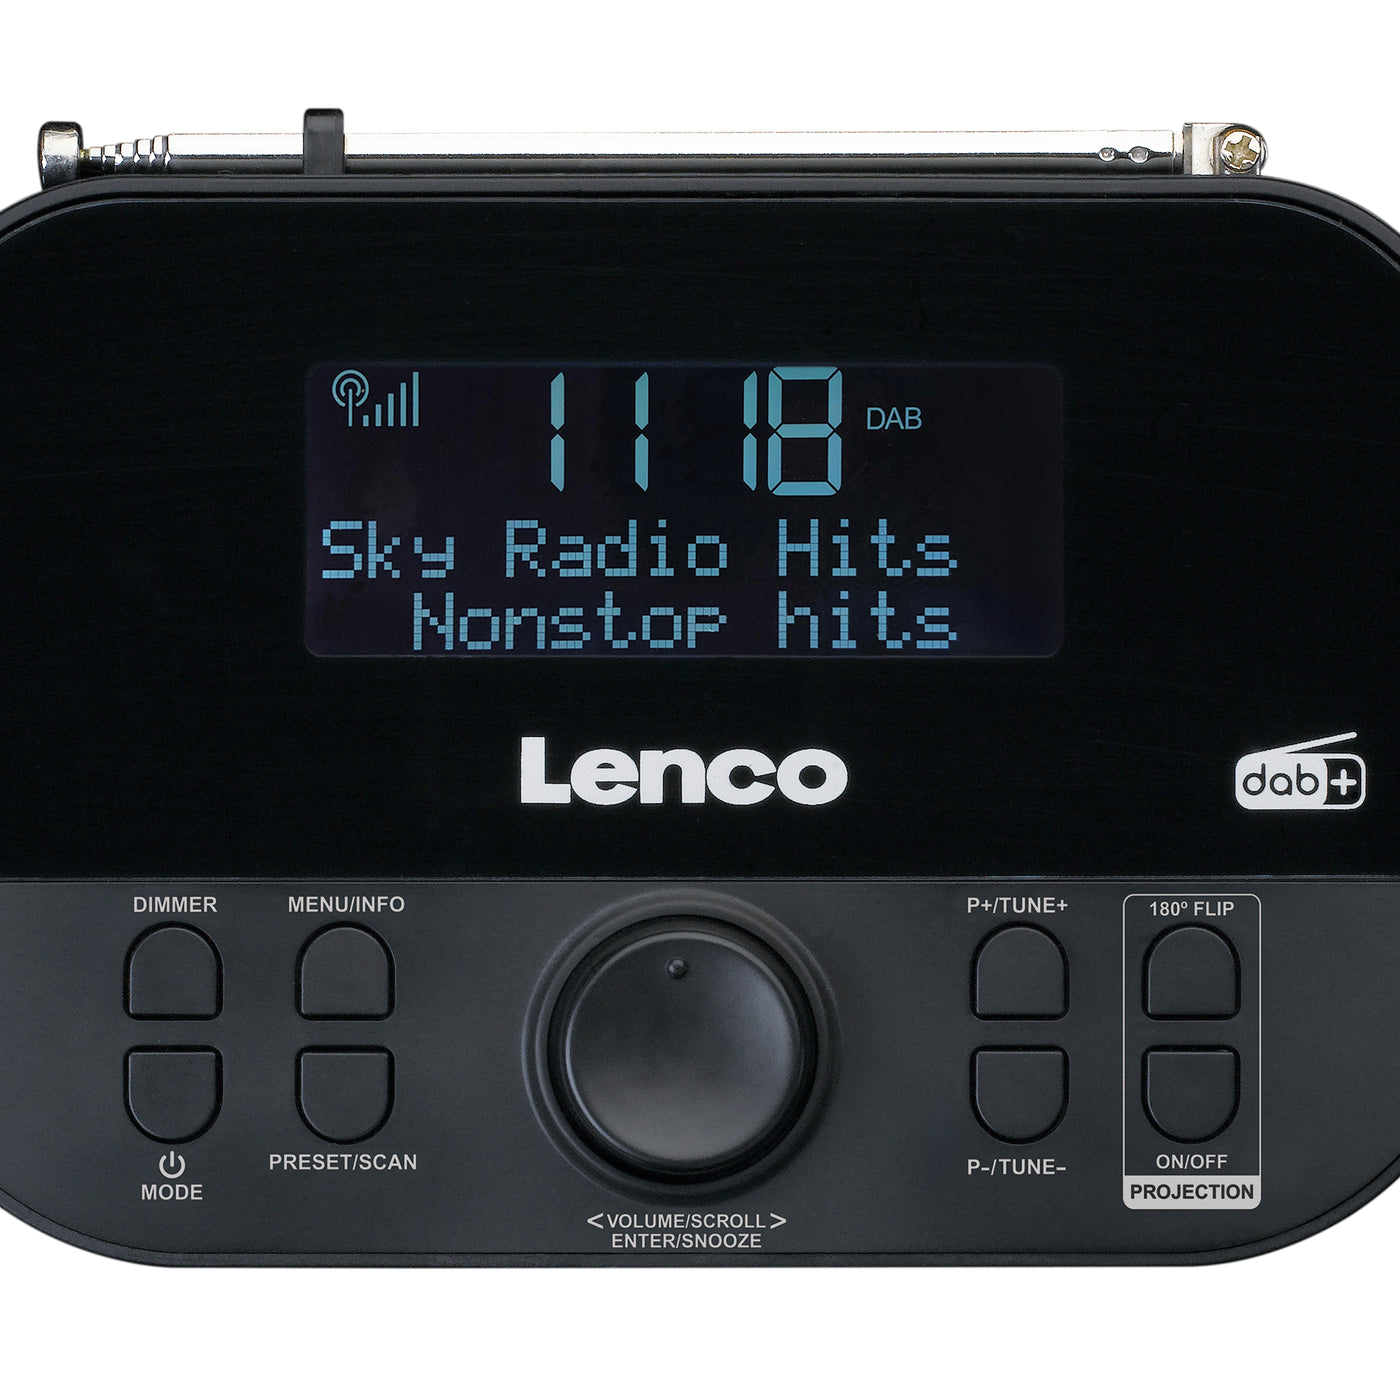 LENCO CR-615BK - DAB+ and FM radio with Time projection - Black – Lenco -Catalog